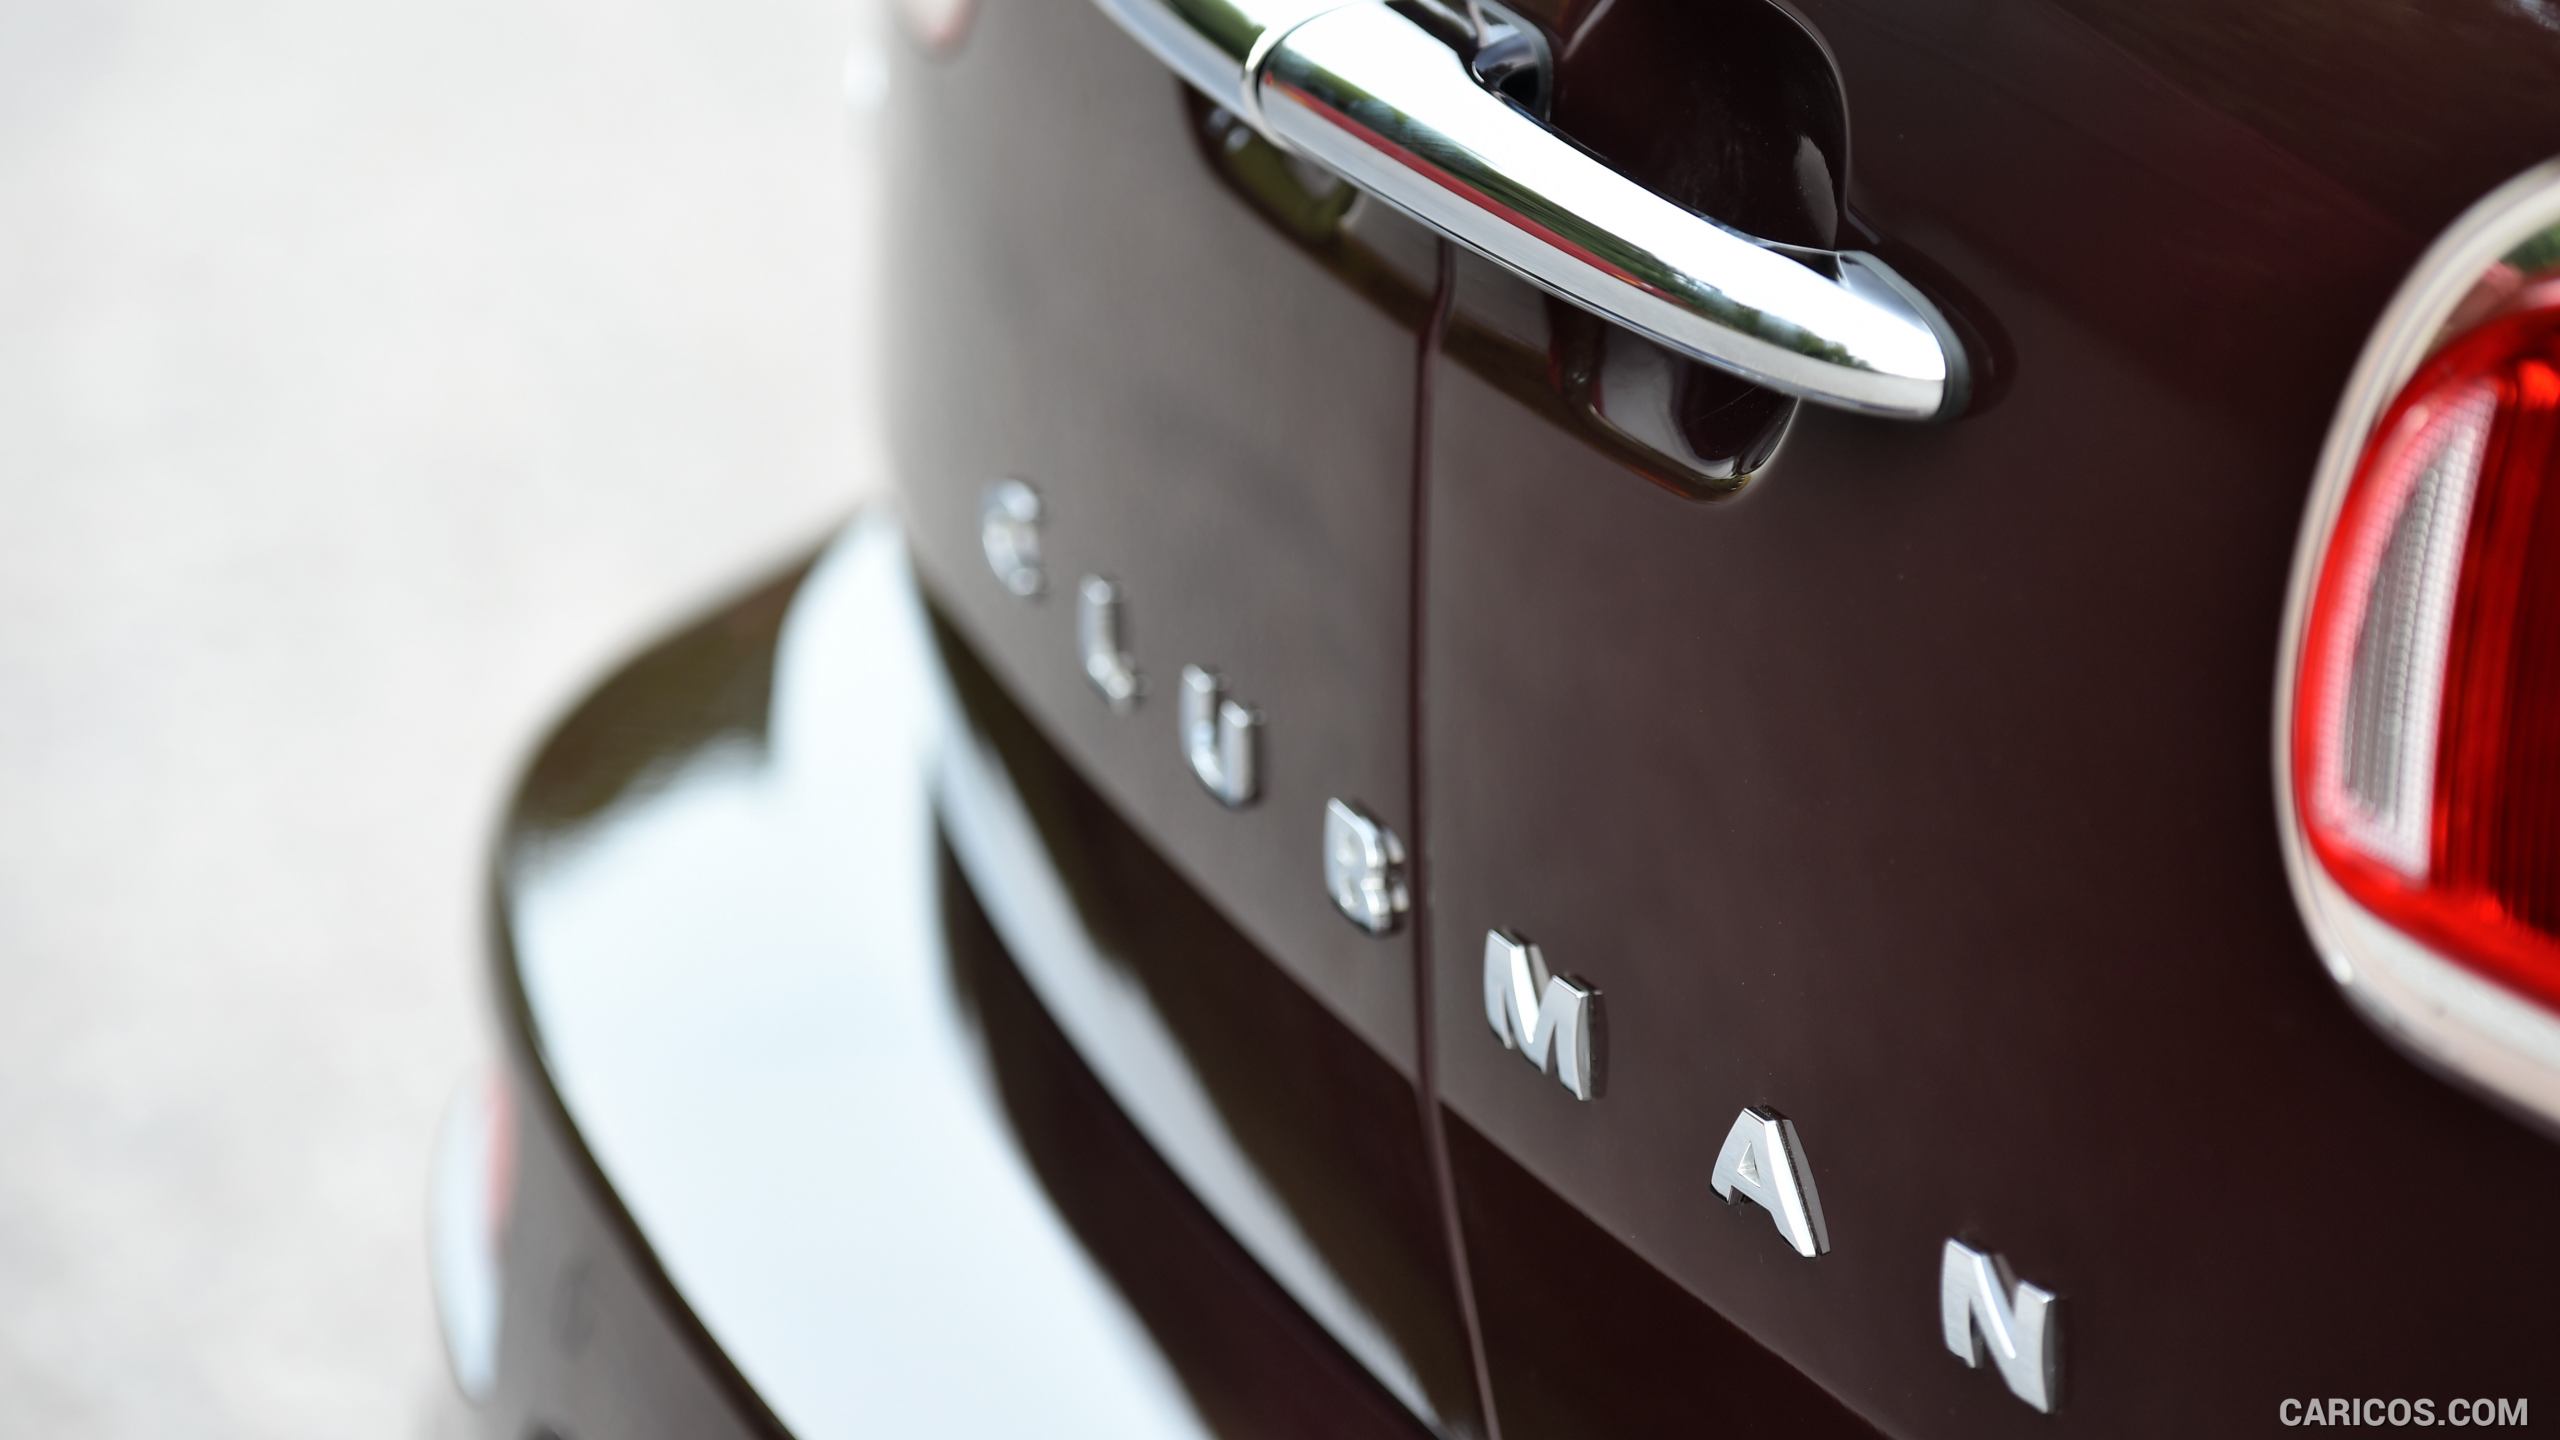 2016 MINI Cooper S Clubman in Metallic Pure Burgundy - Tailgate, #352 of 380